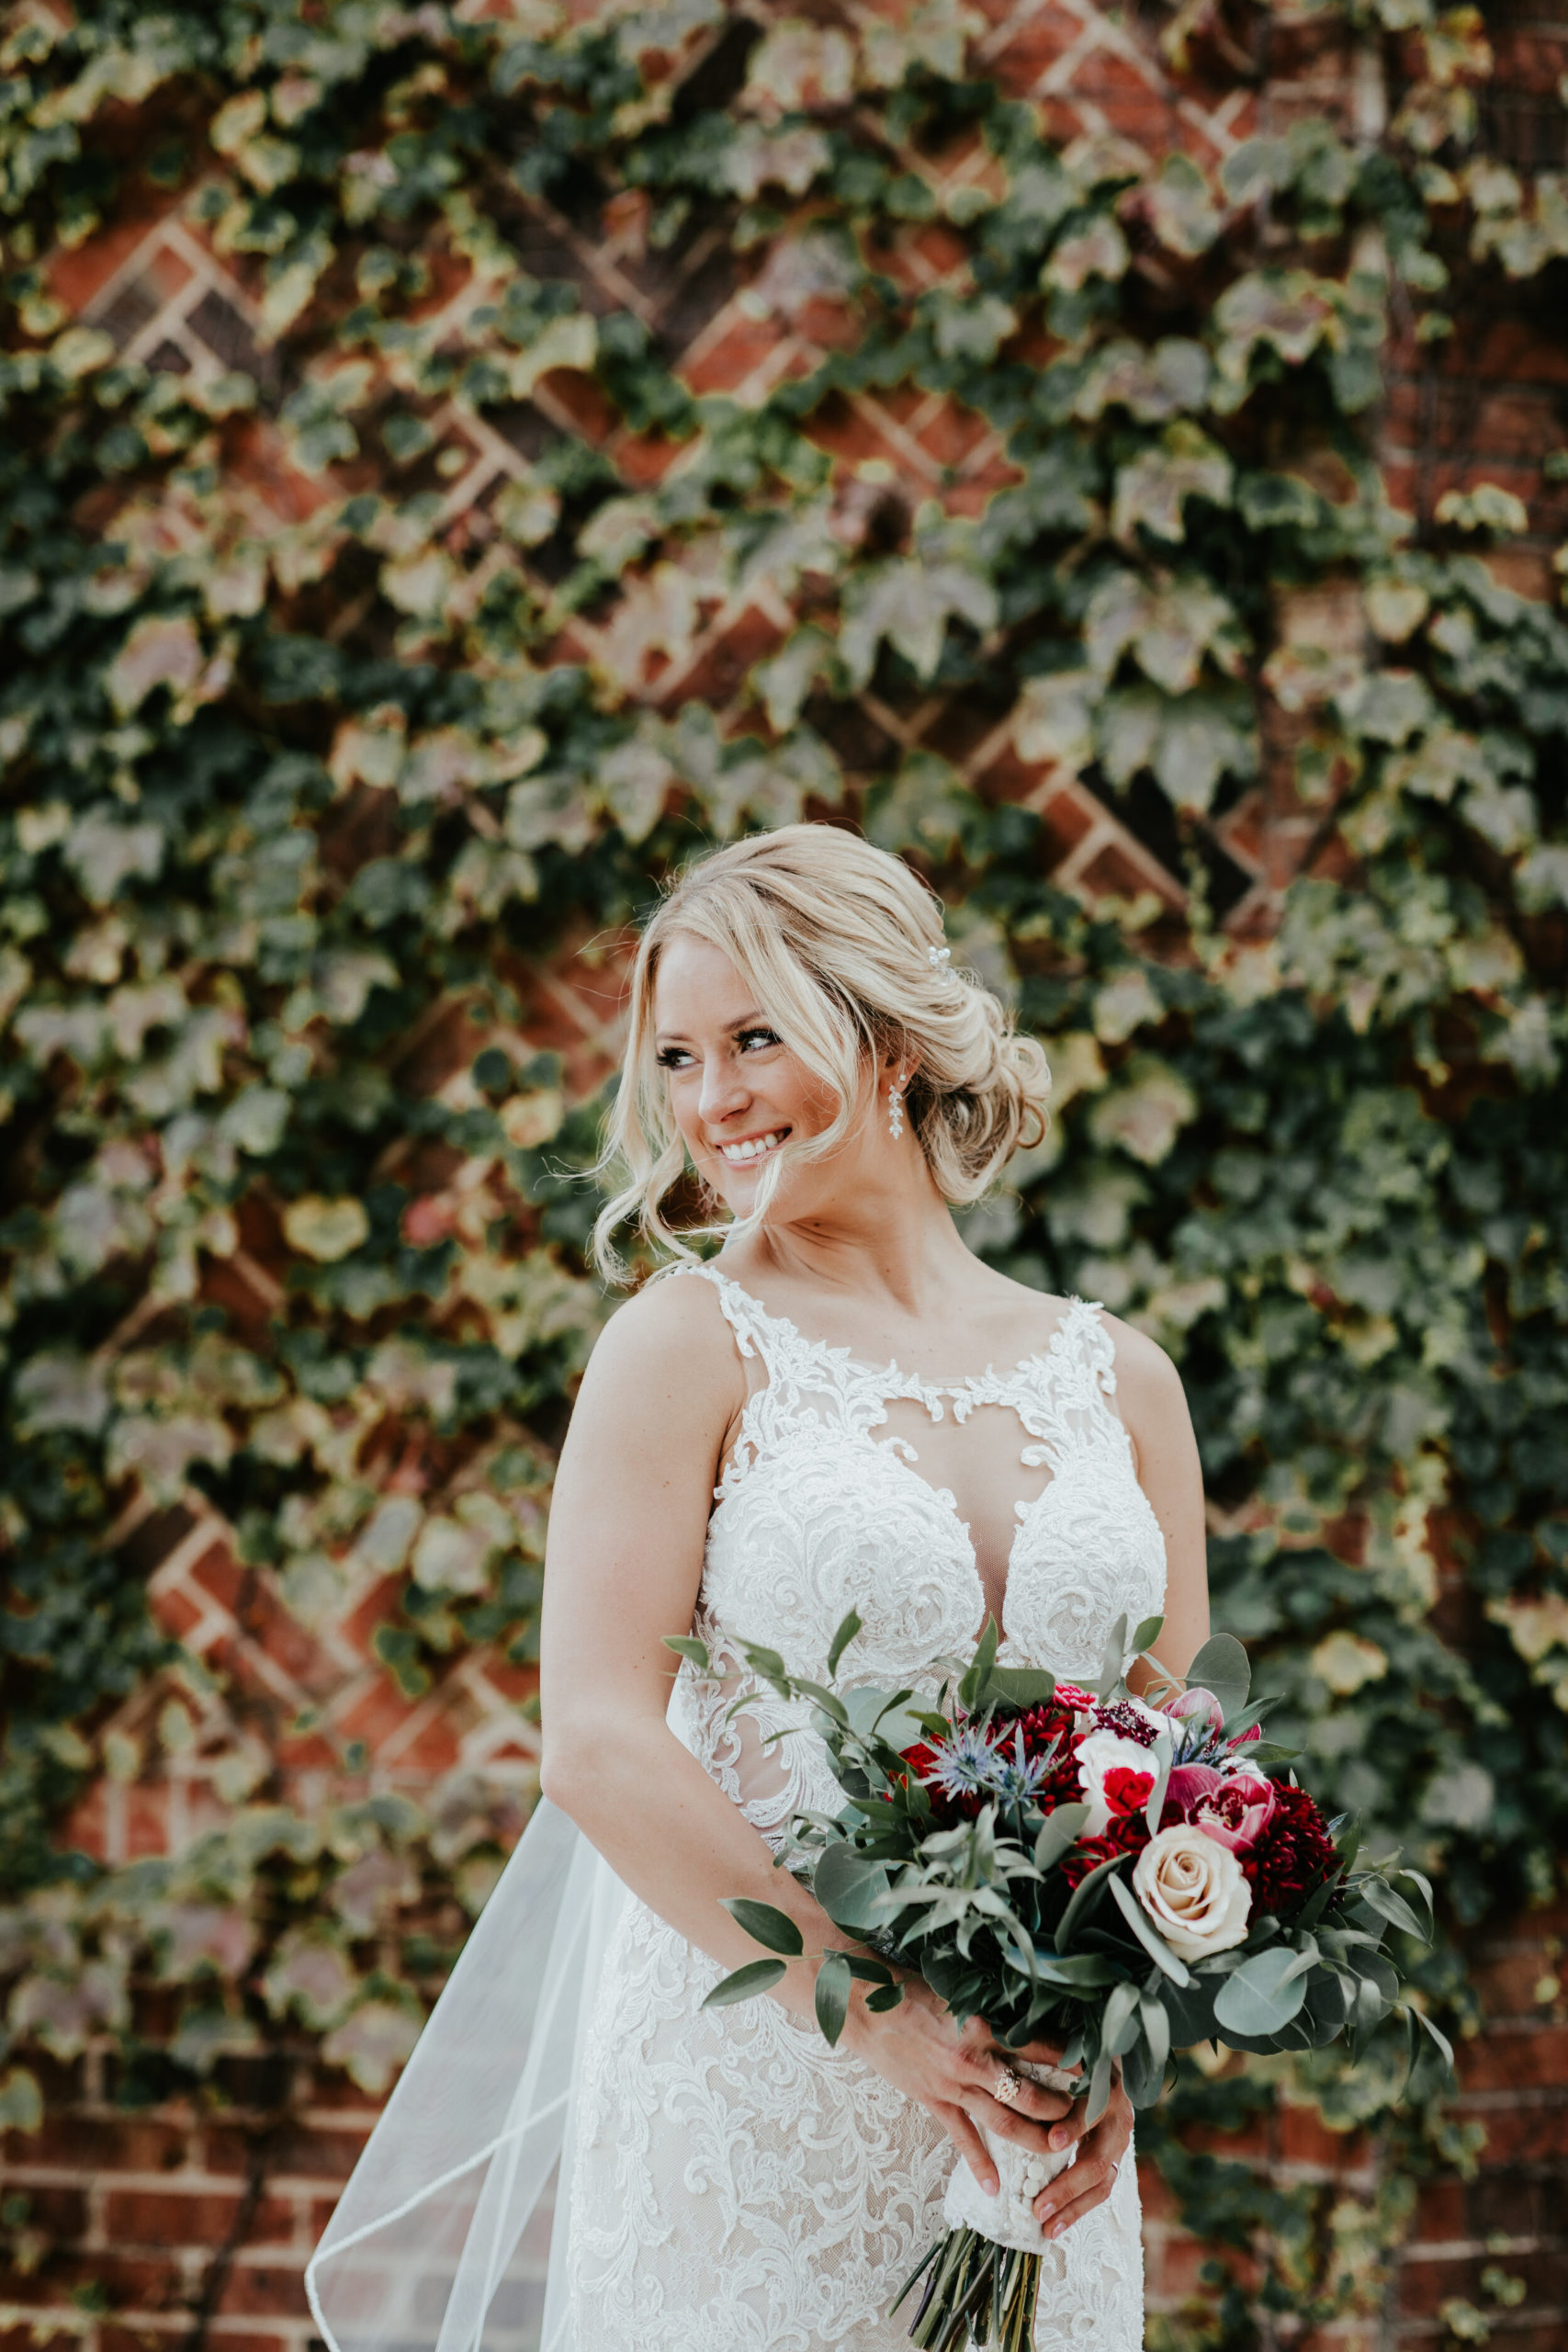 Bride + Groom Danielle Schury Photography Copyright 2019 (3).JPG